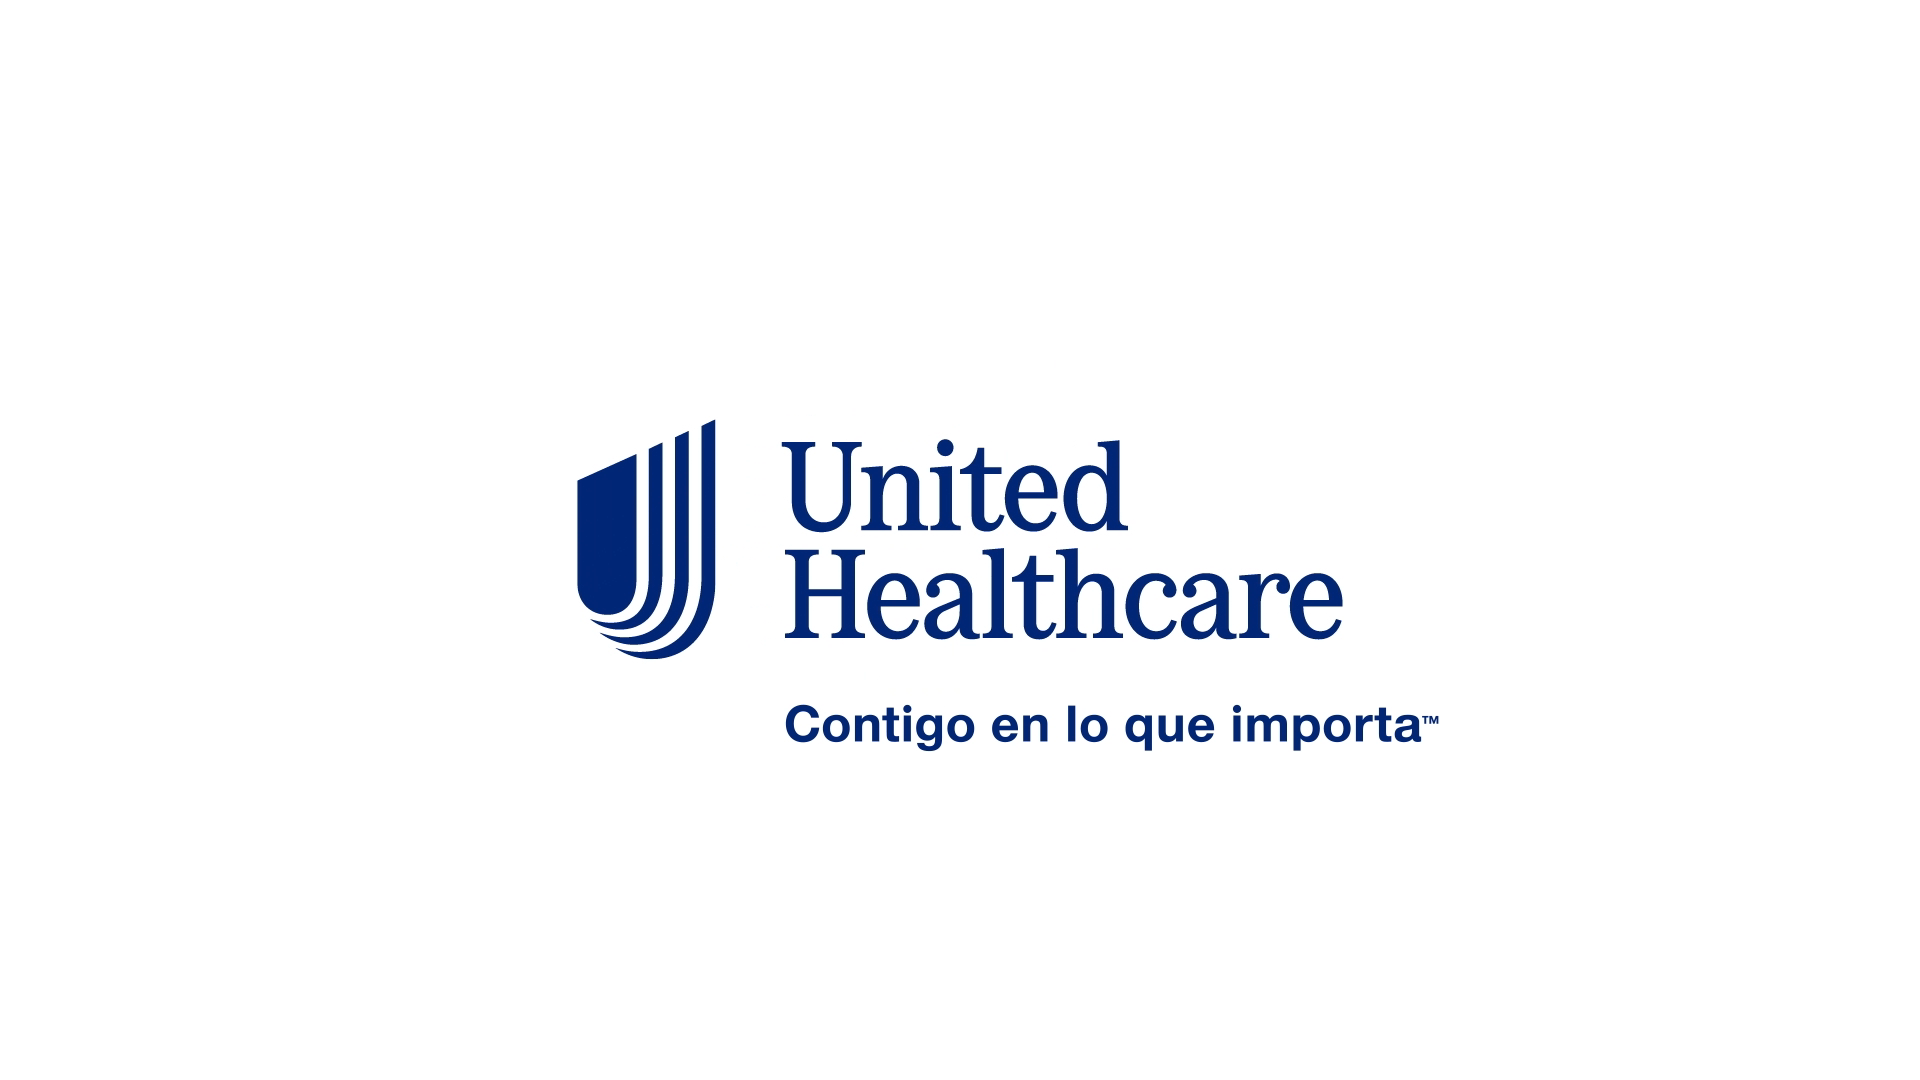 UNITED HEALTHCARE